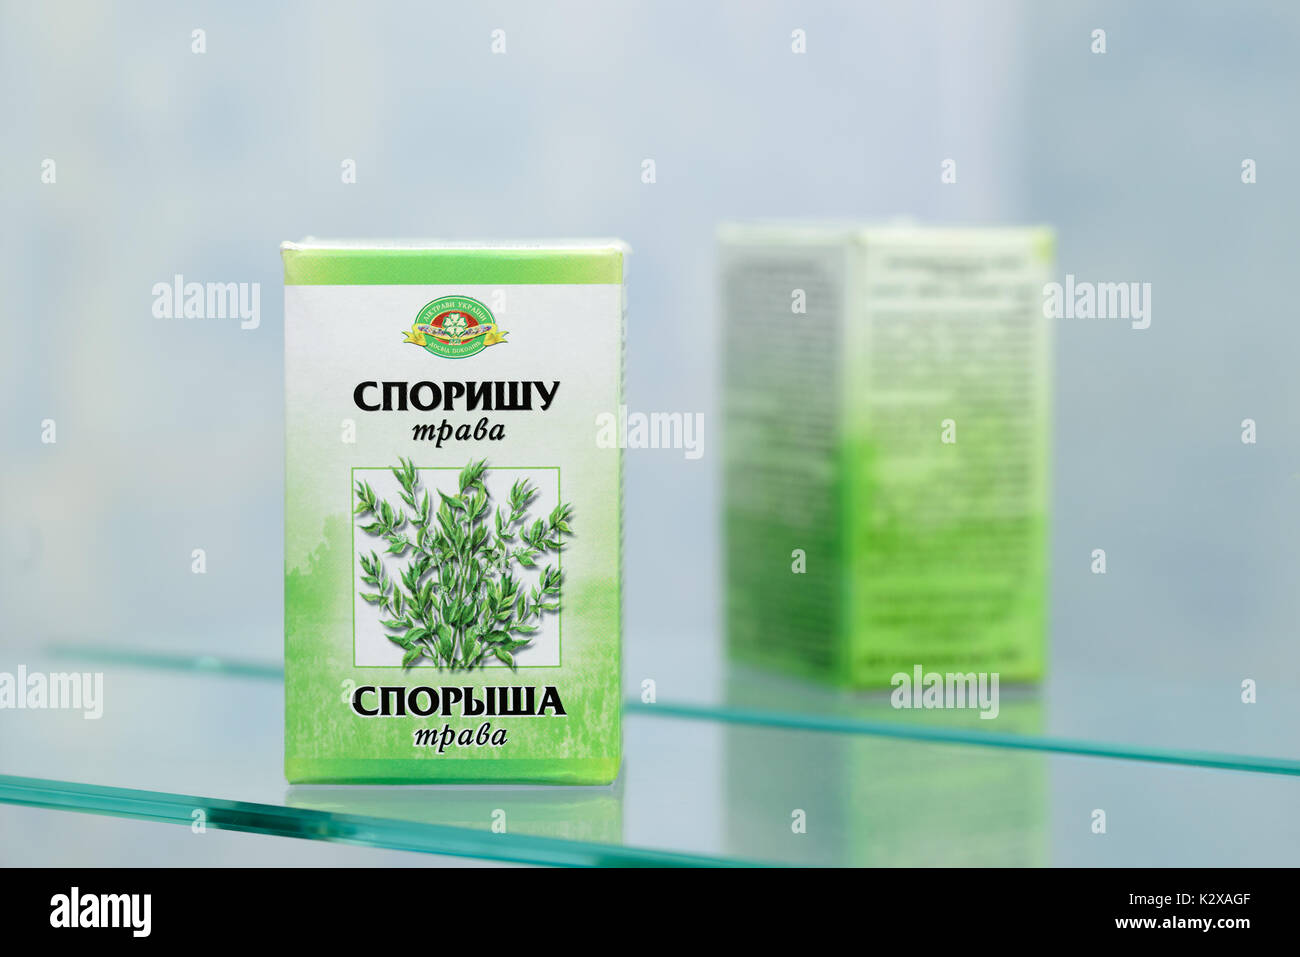 Kiev/Ukraine - August 27, 2017 - Spore grass (Sporysha trava), Polygonum aviculare  infusion, from the brand 'elbows of ukraine experience of generati Stock Photo